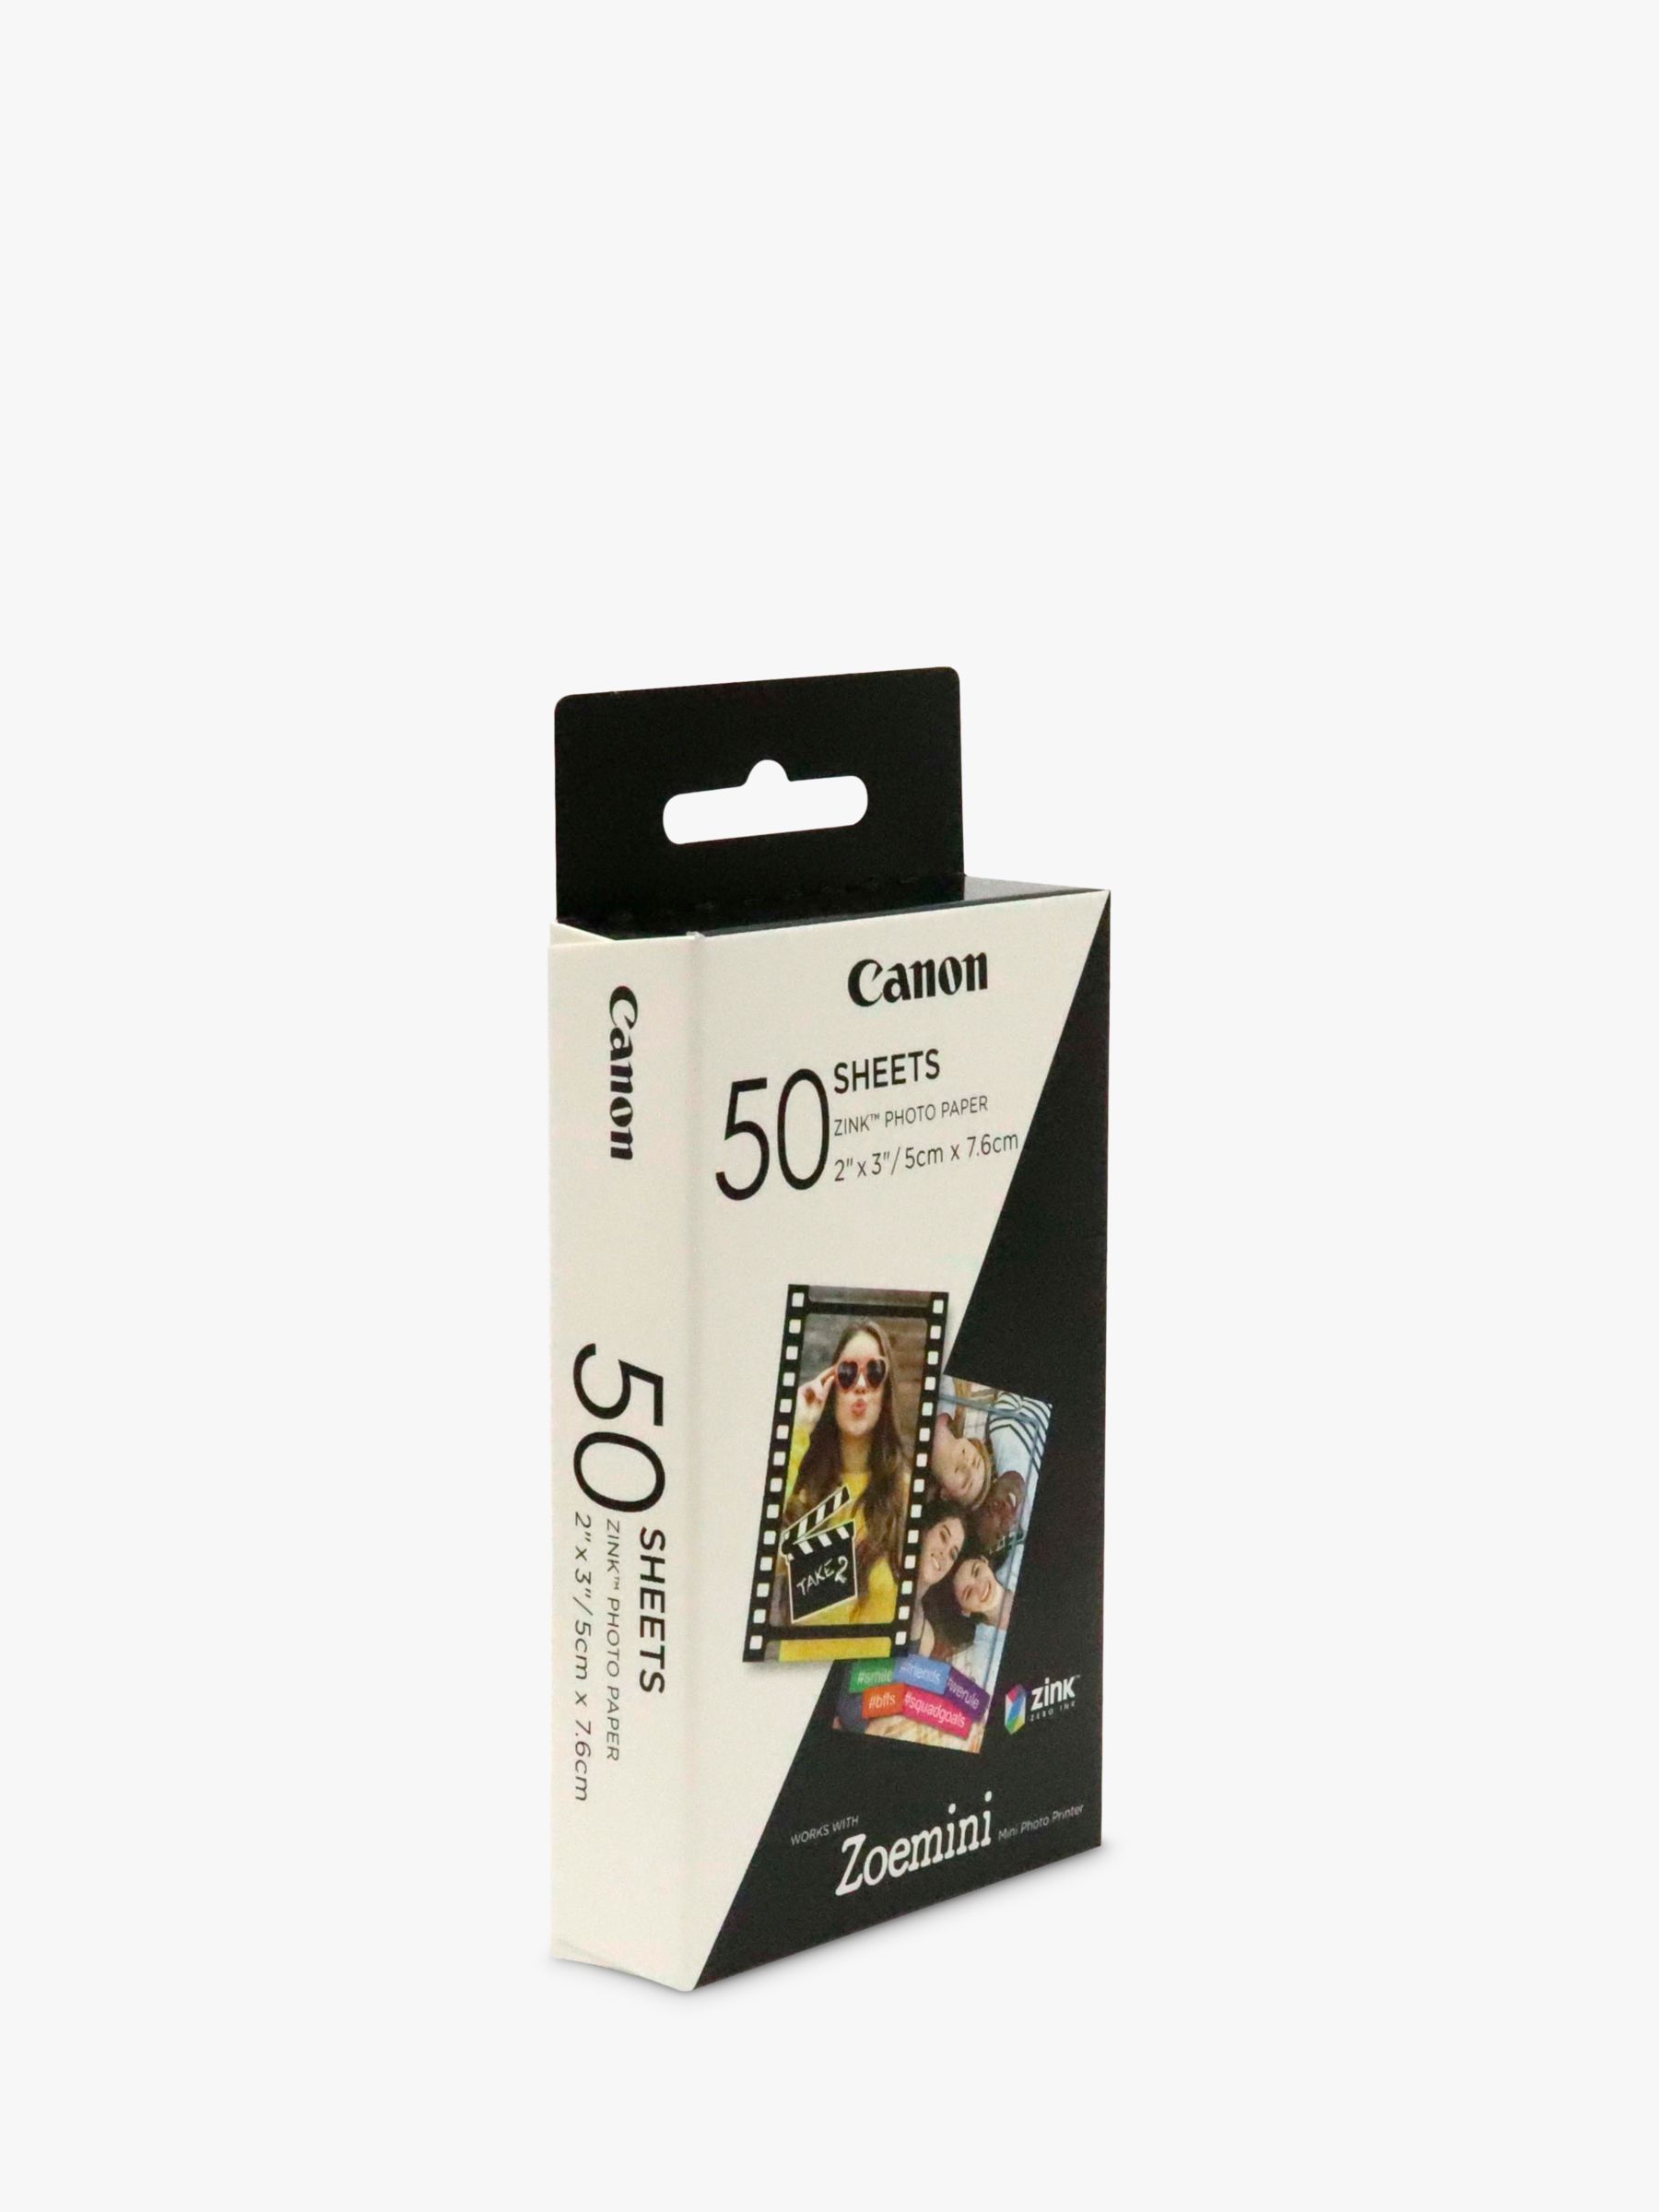 Kodak 2x3 Premium Zink Photo Paper (100 Sheets)